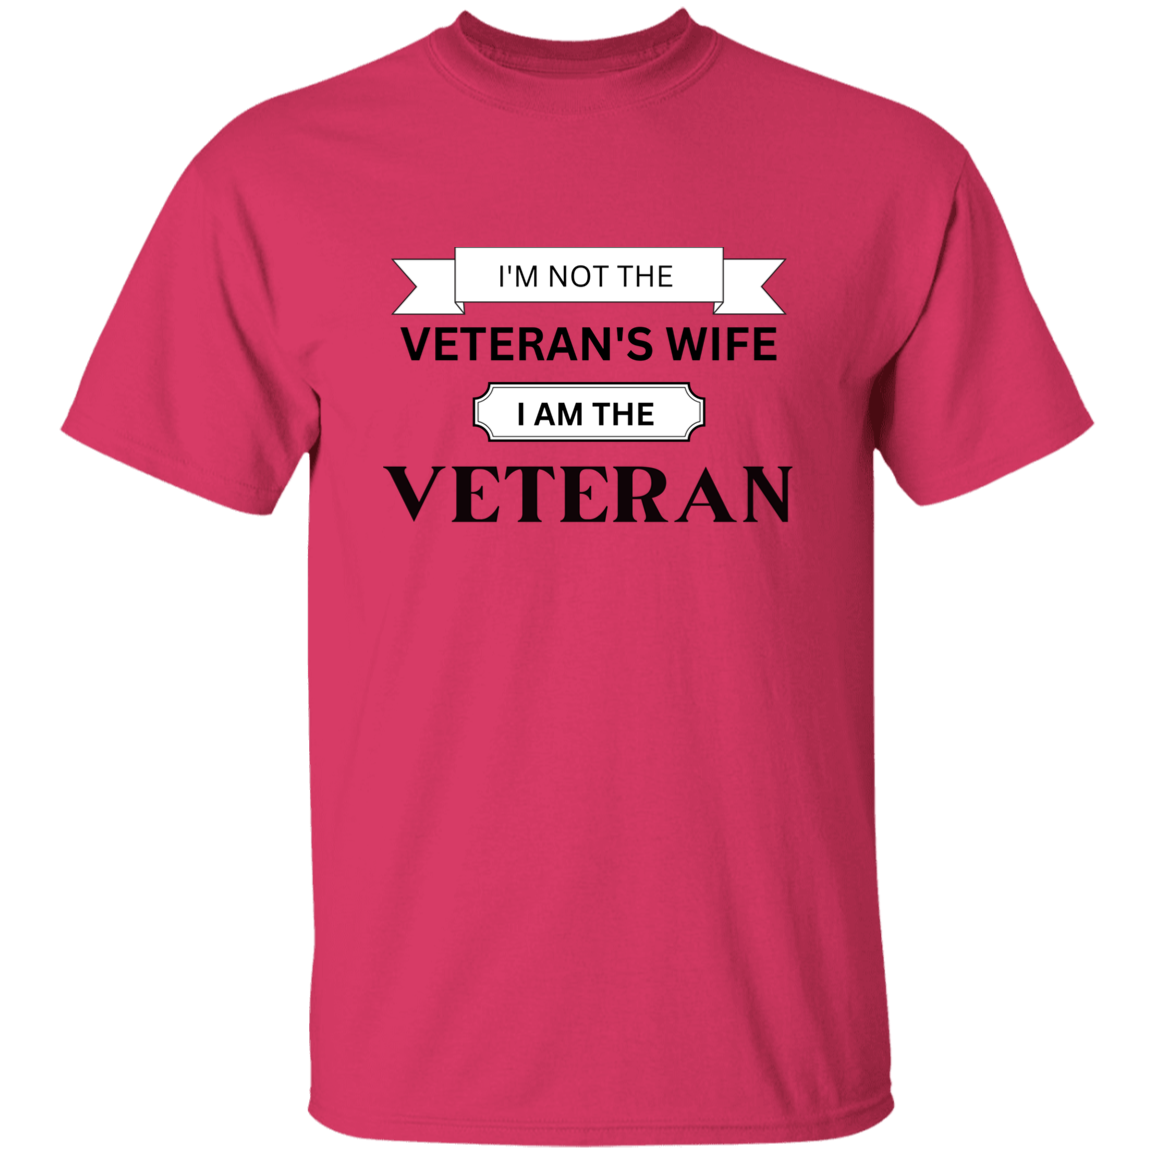 I'm Not the Veteran's Wife - I am the Veteran T-Shirt